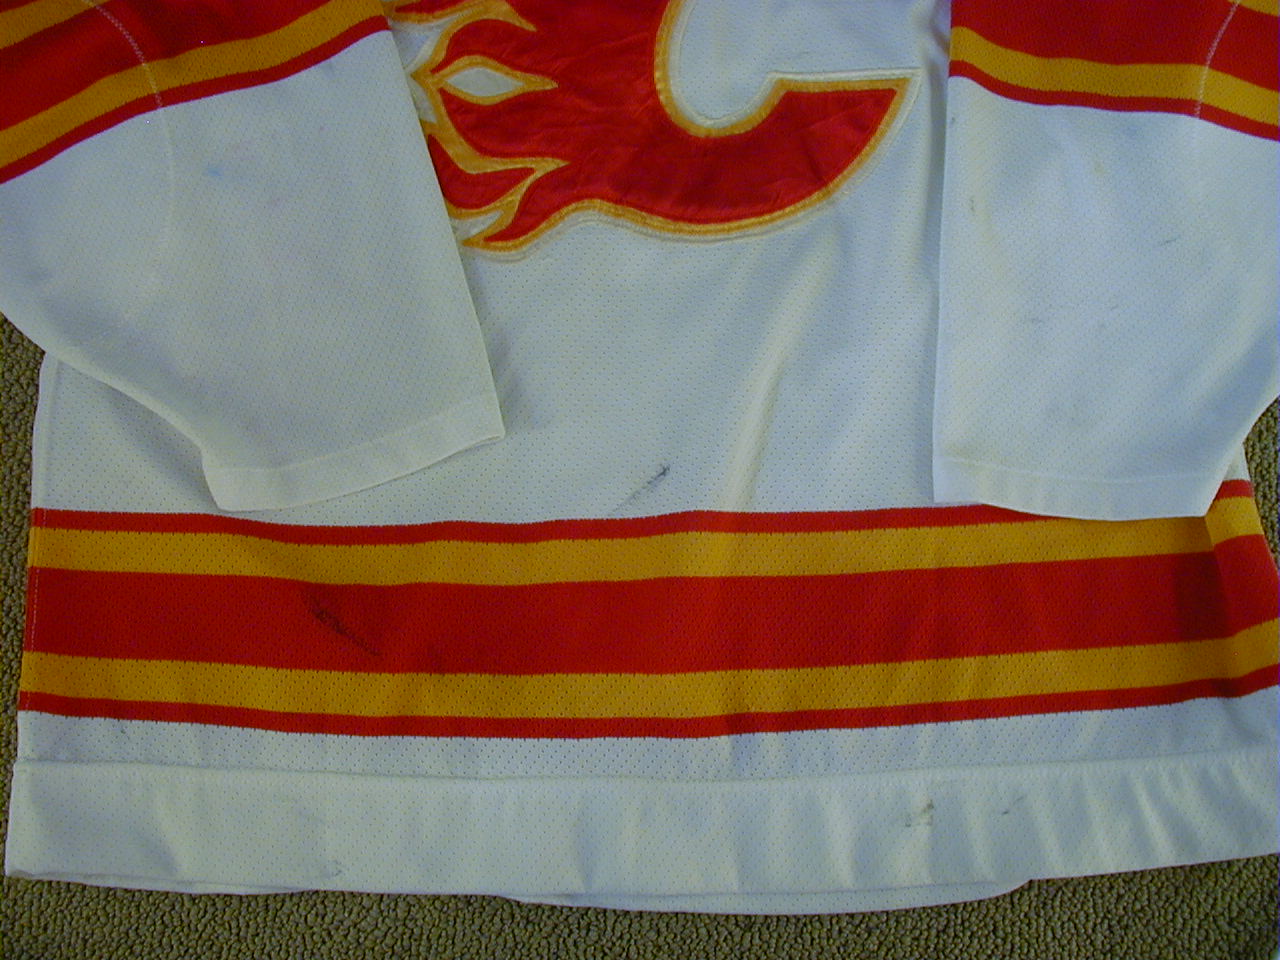 1988-89 Tim Hunter Game Worn, Signed Calgary Flames Jersey 